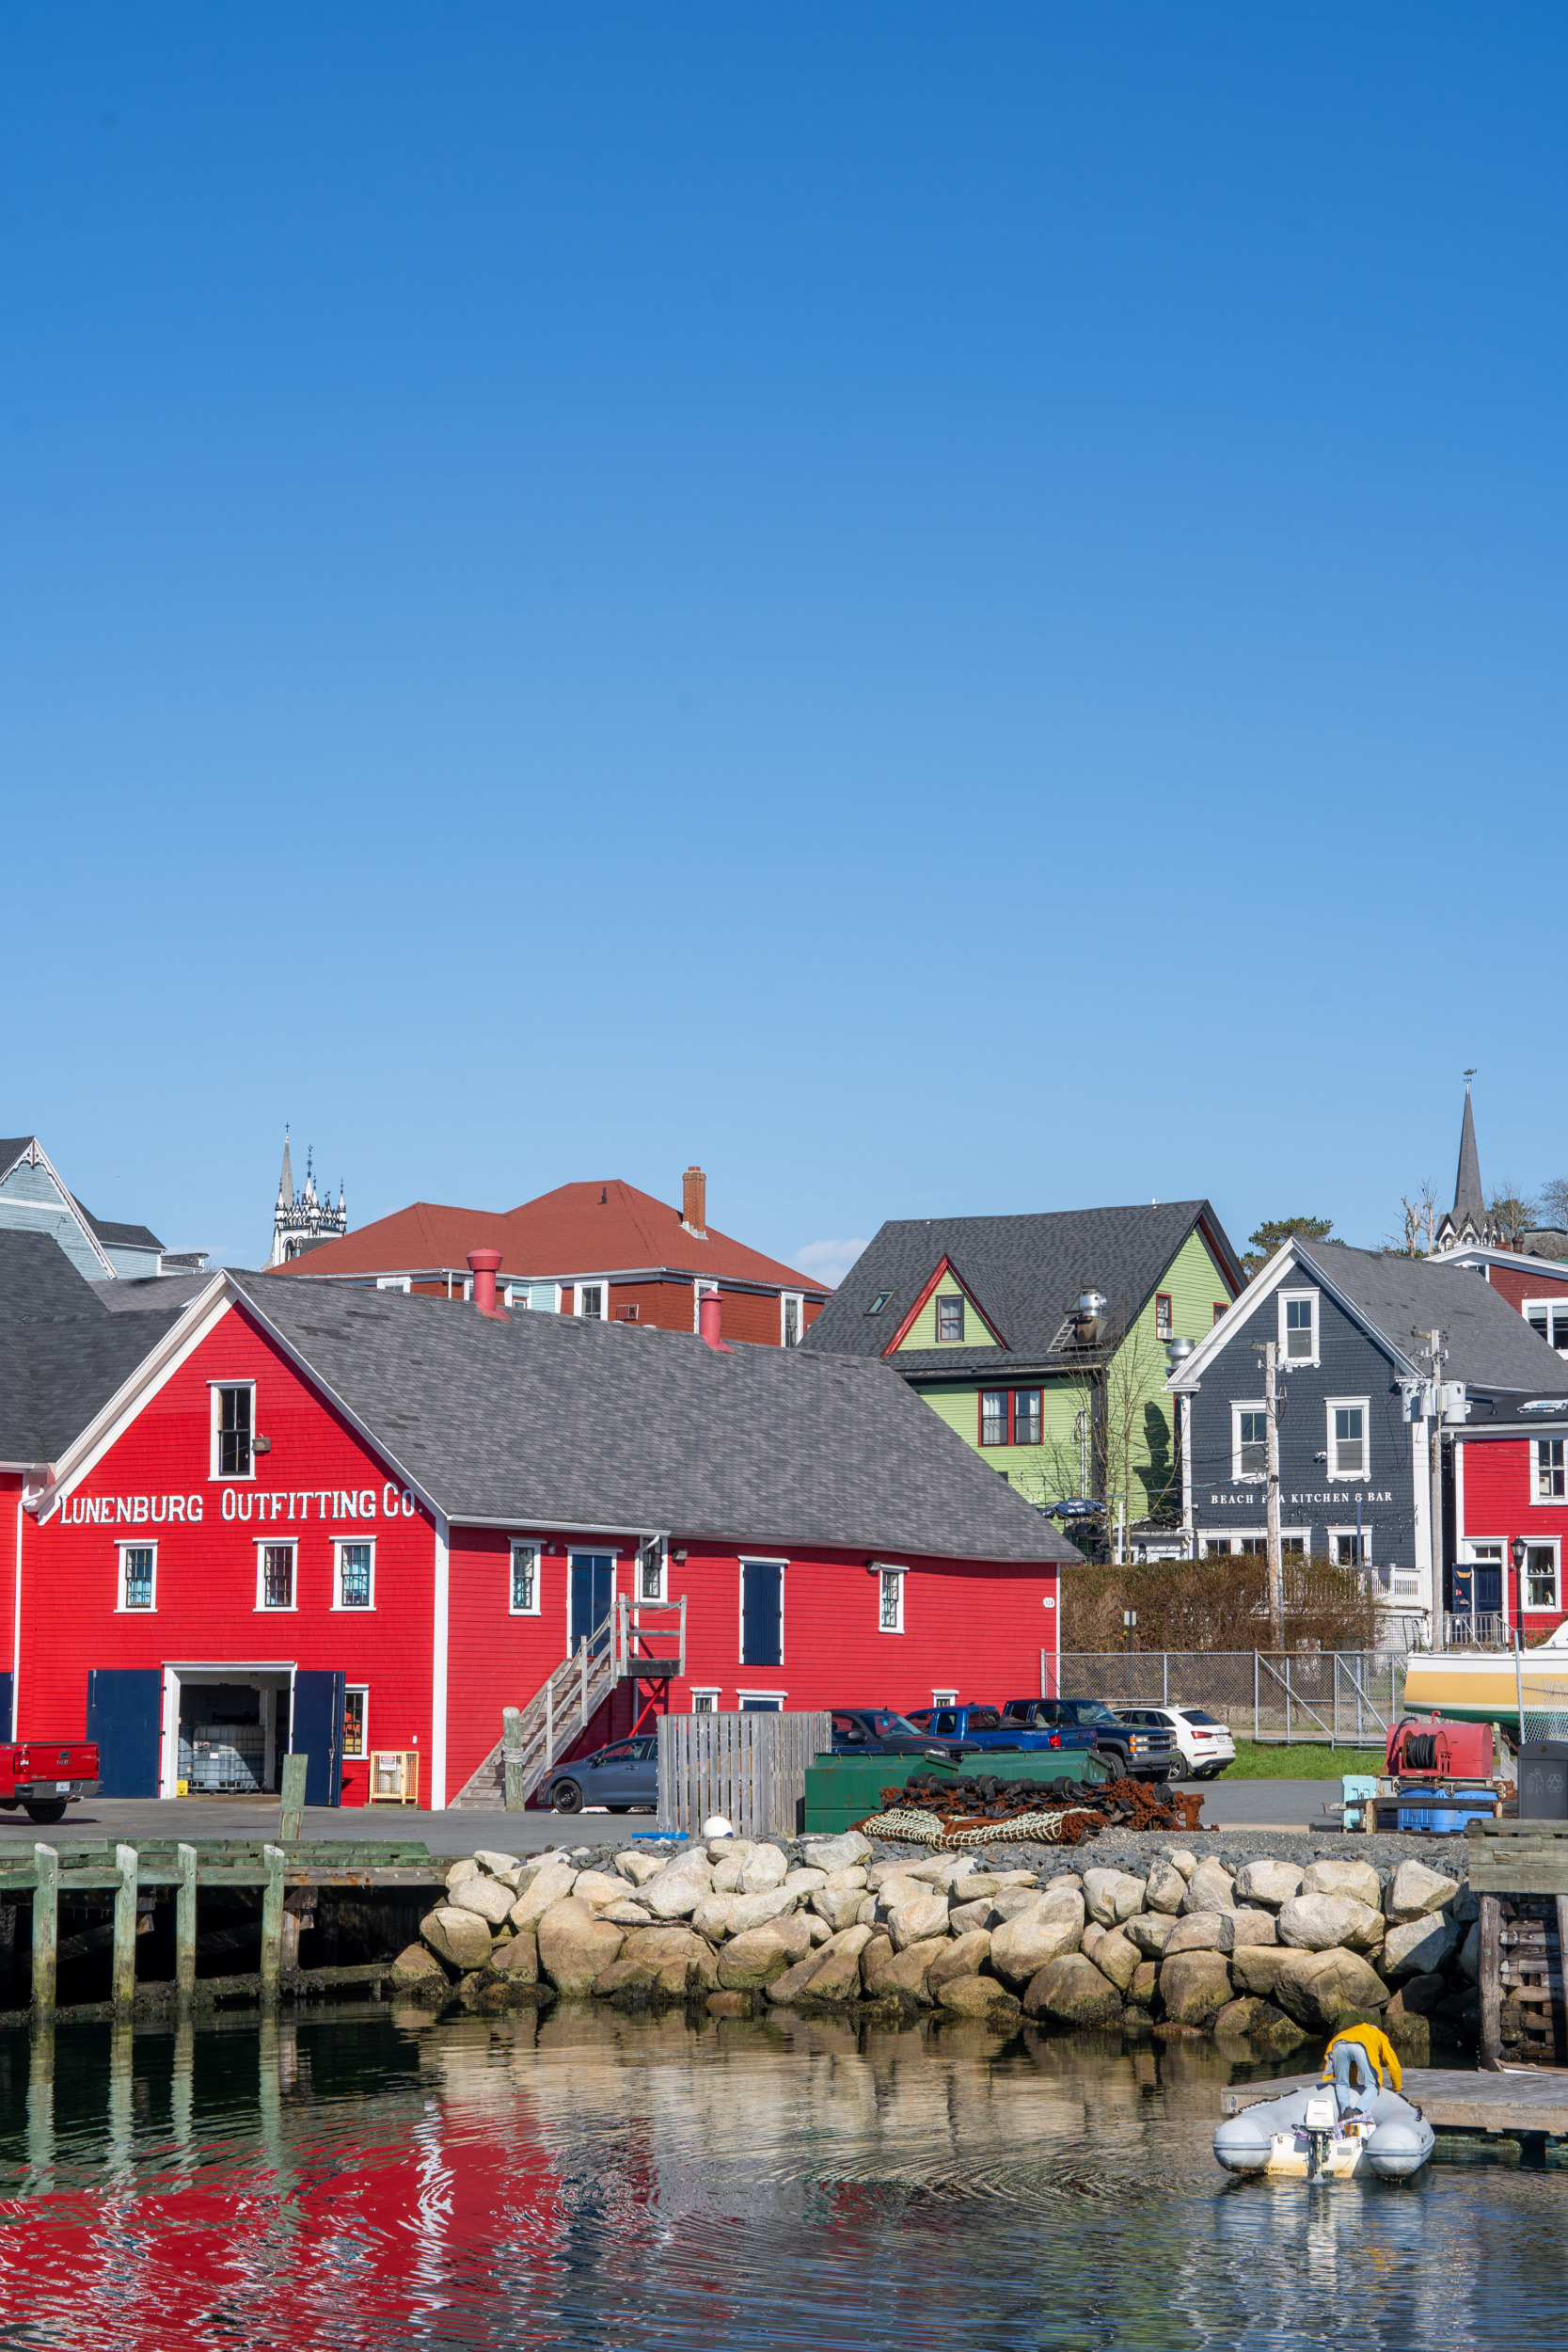 Lunenburg in Nova Scotia